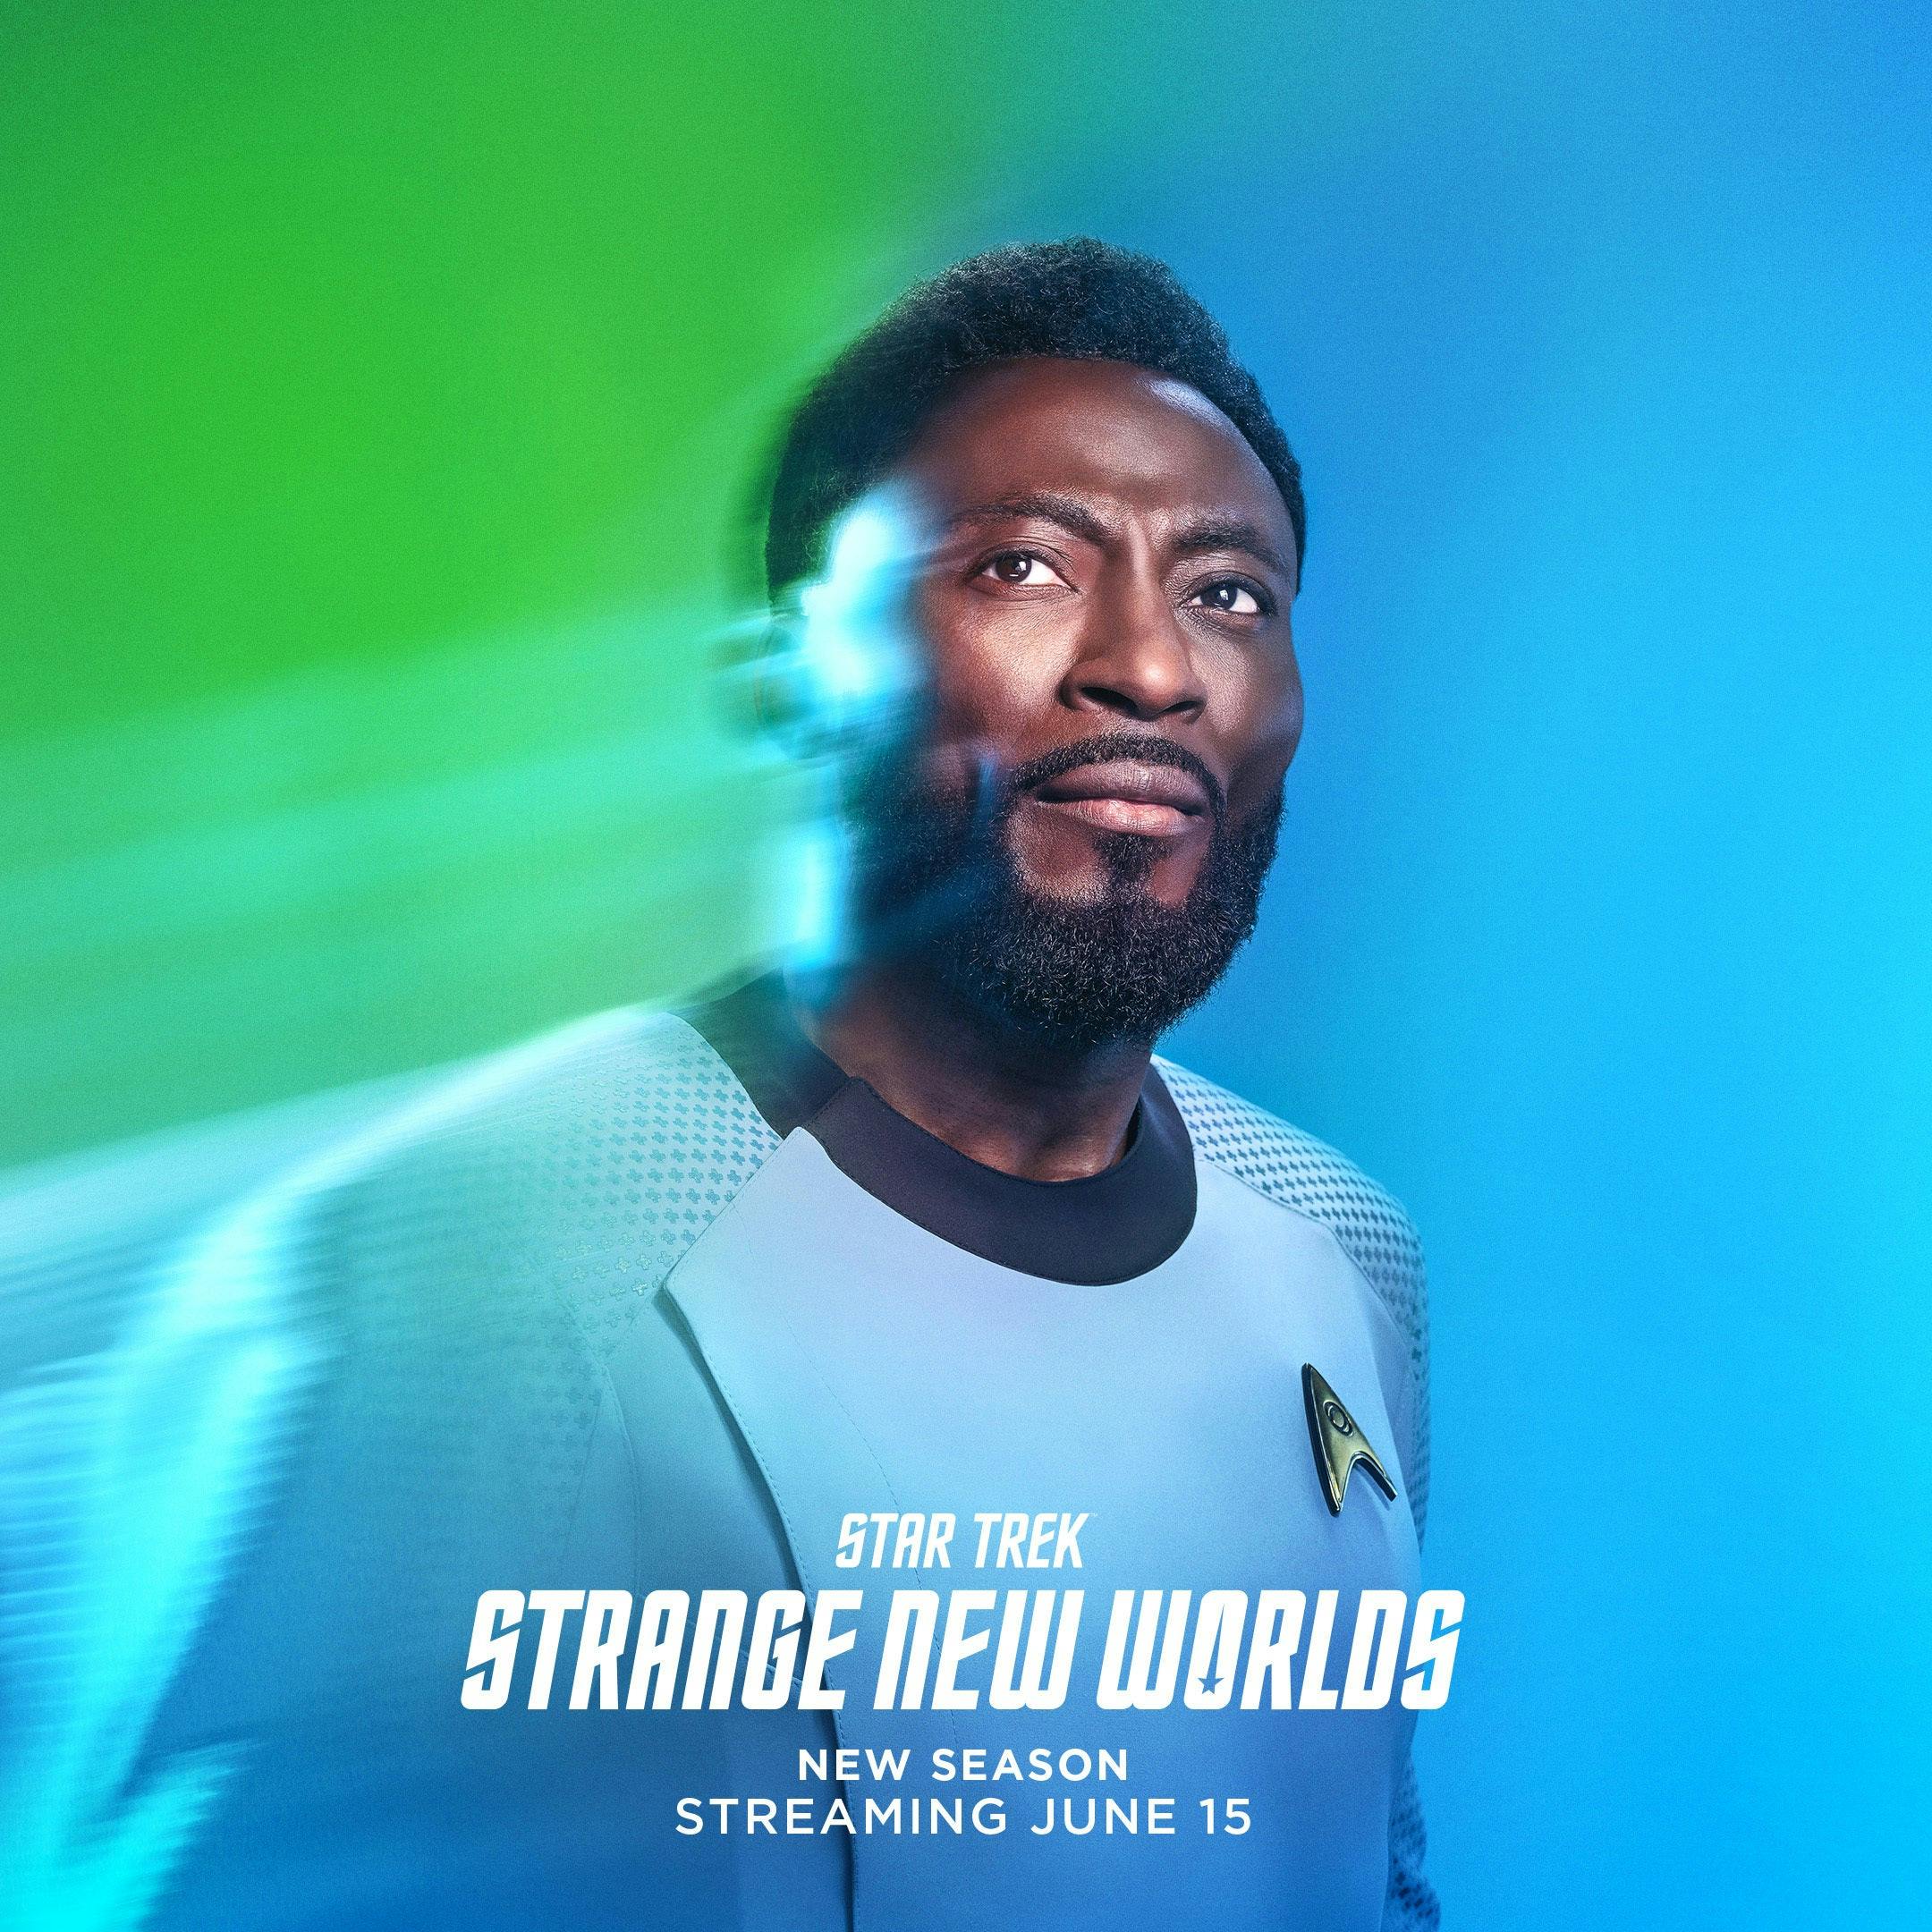 Star Trek: Strange New Worlds Season 2 Character Art | Babs Olusanmokun as Dr. M’Benga